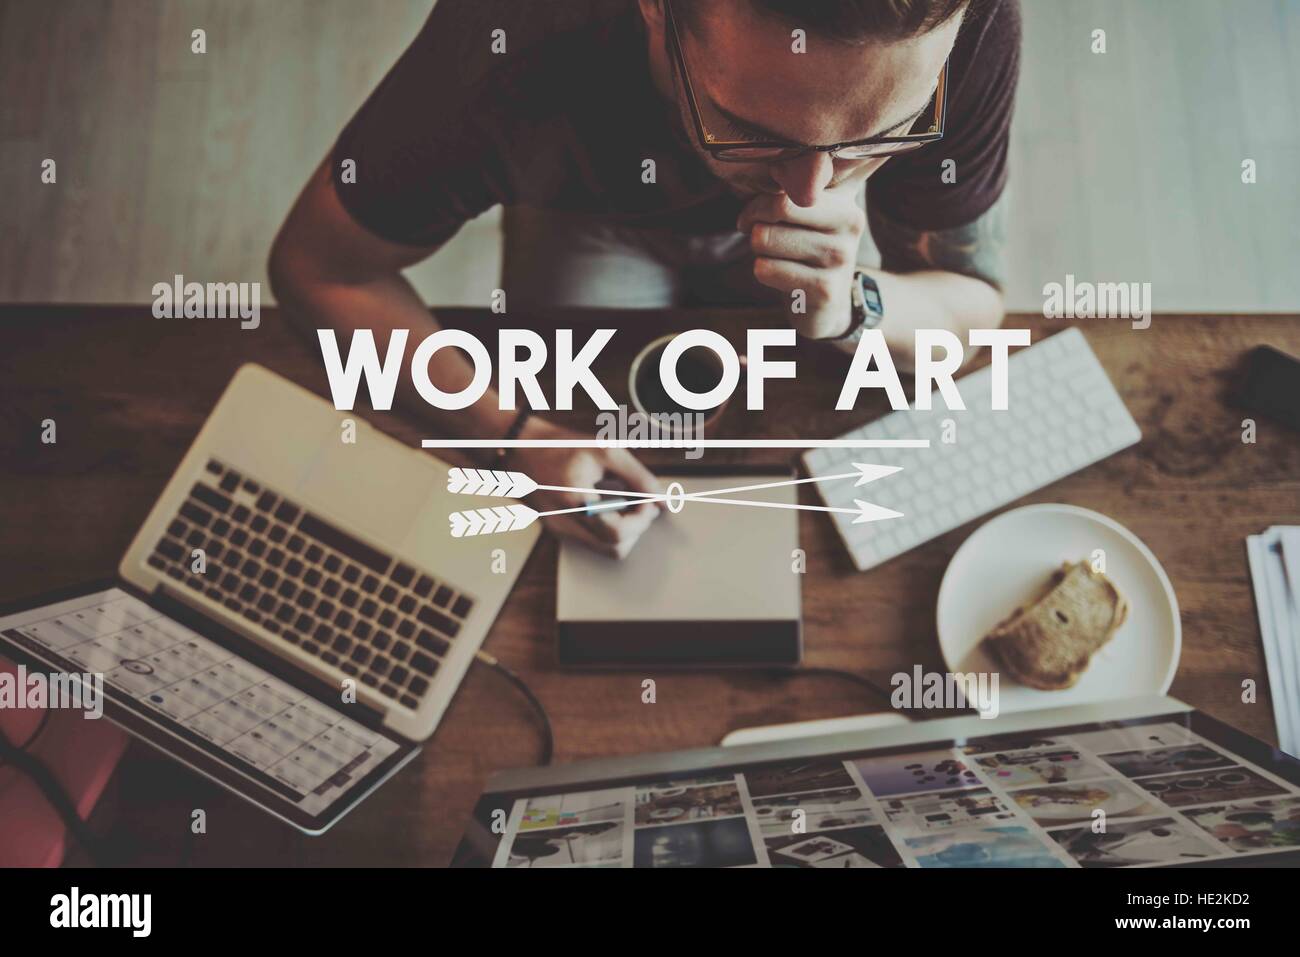 Online Business Work Office Art Concept Stock Photo